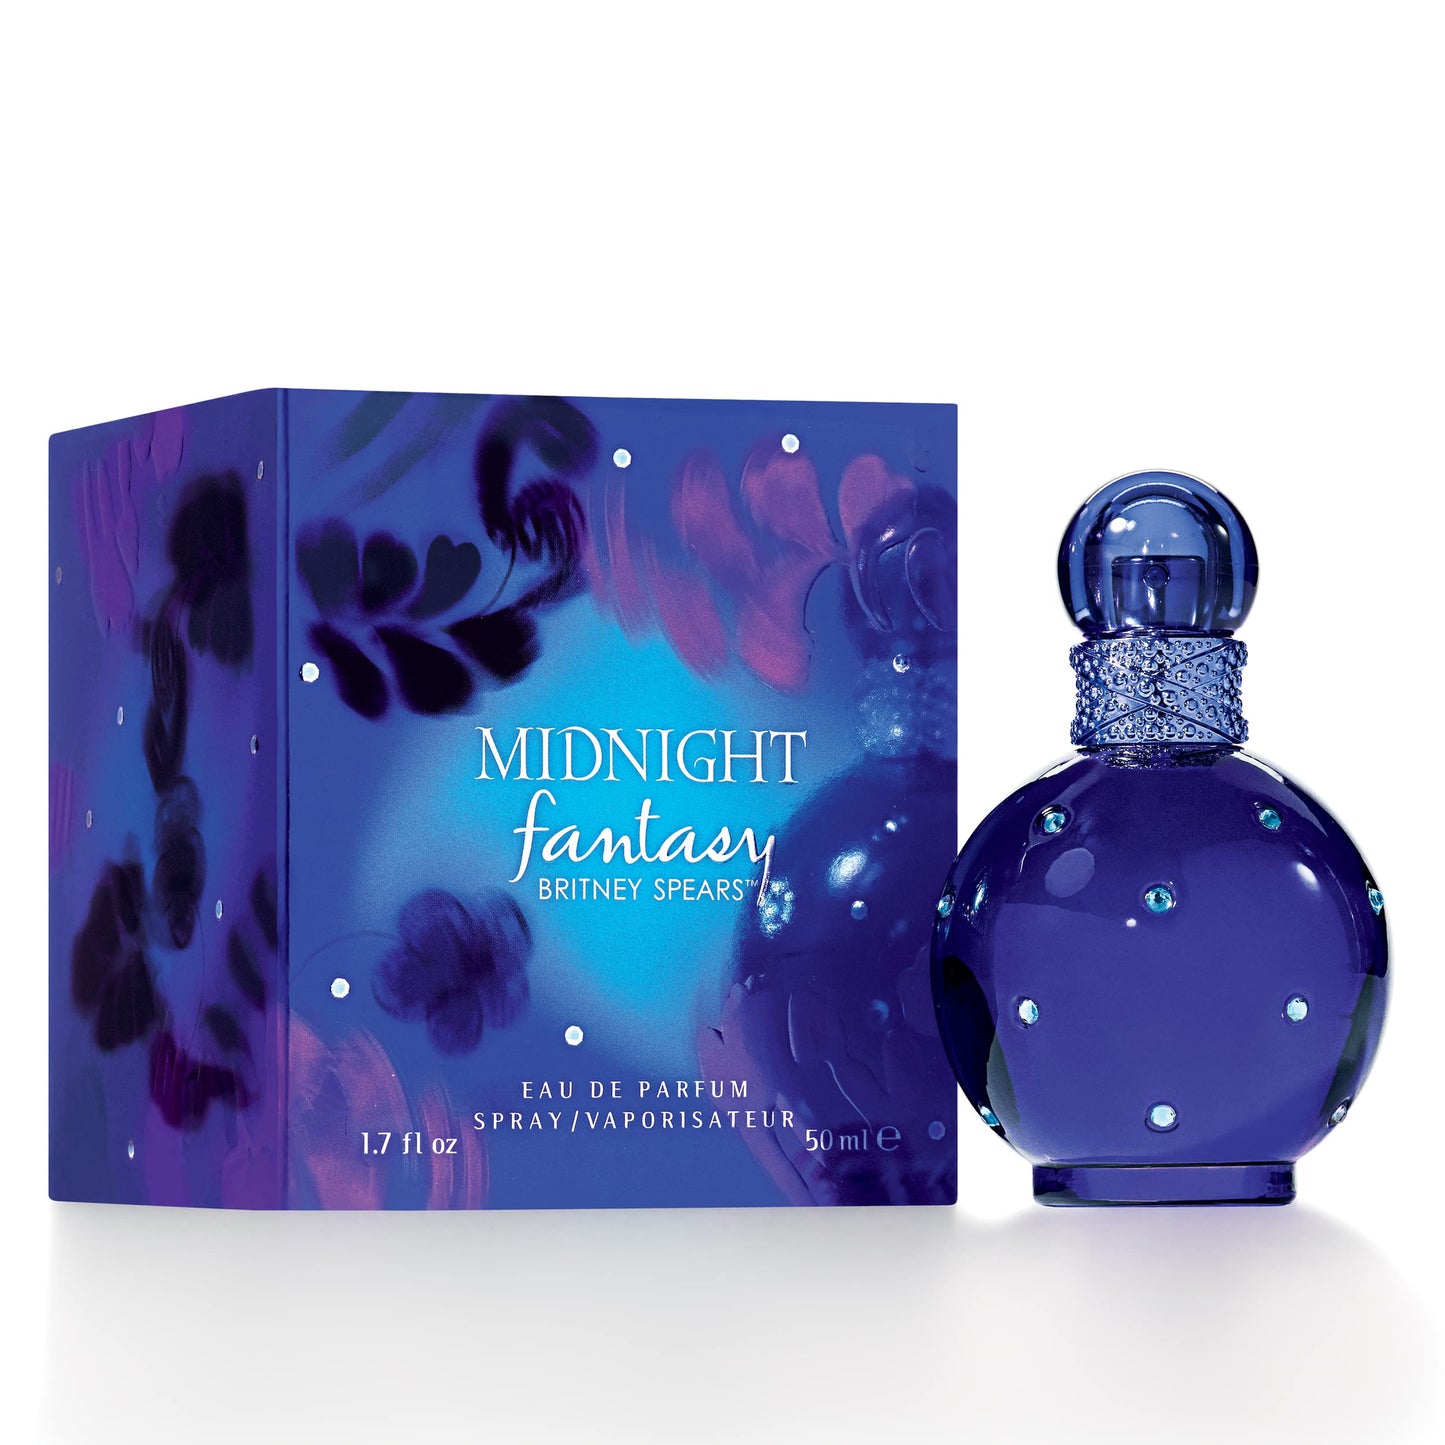 Eau de Parfum Britney Spears Midnight Fantasy 100ML